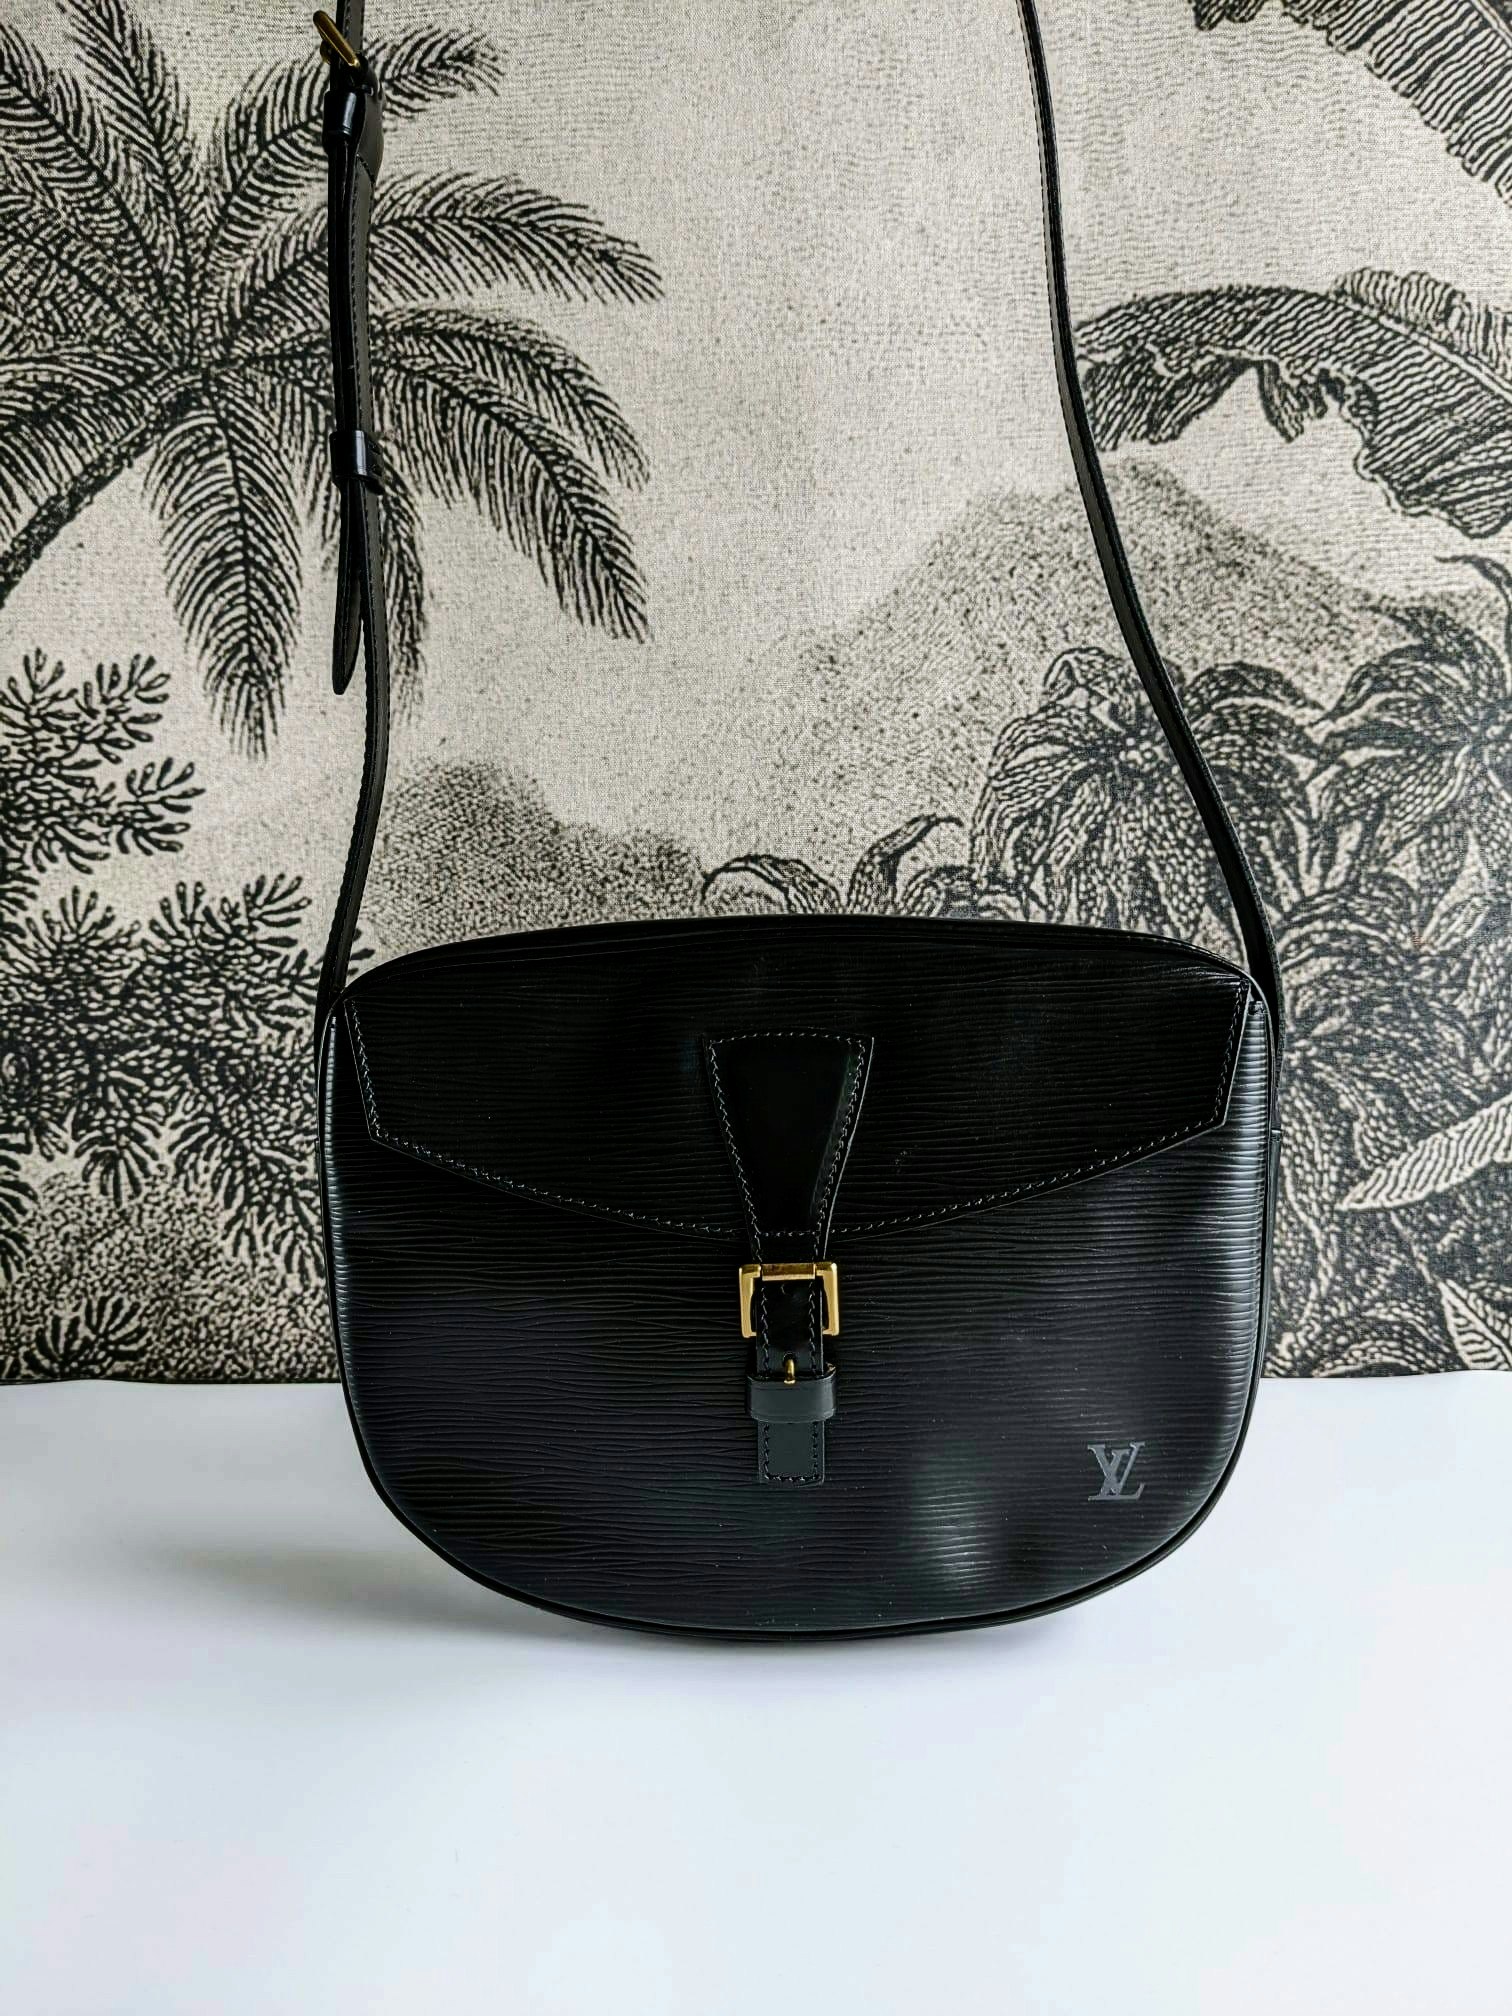 Louis Vuitton Jeune Fille MM epi - Good or Bag